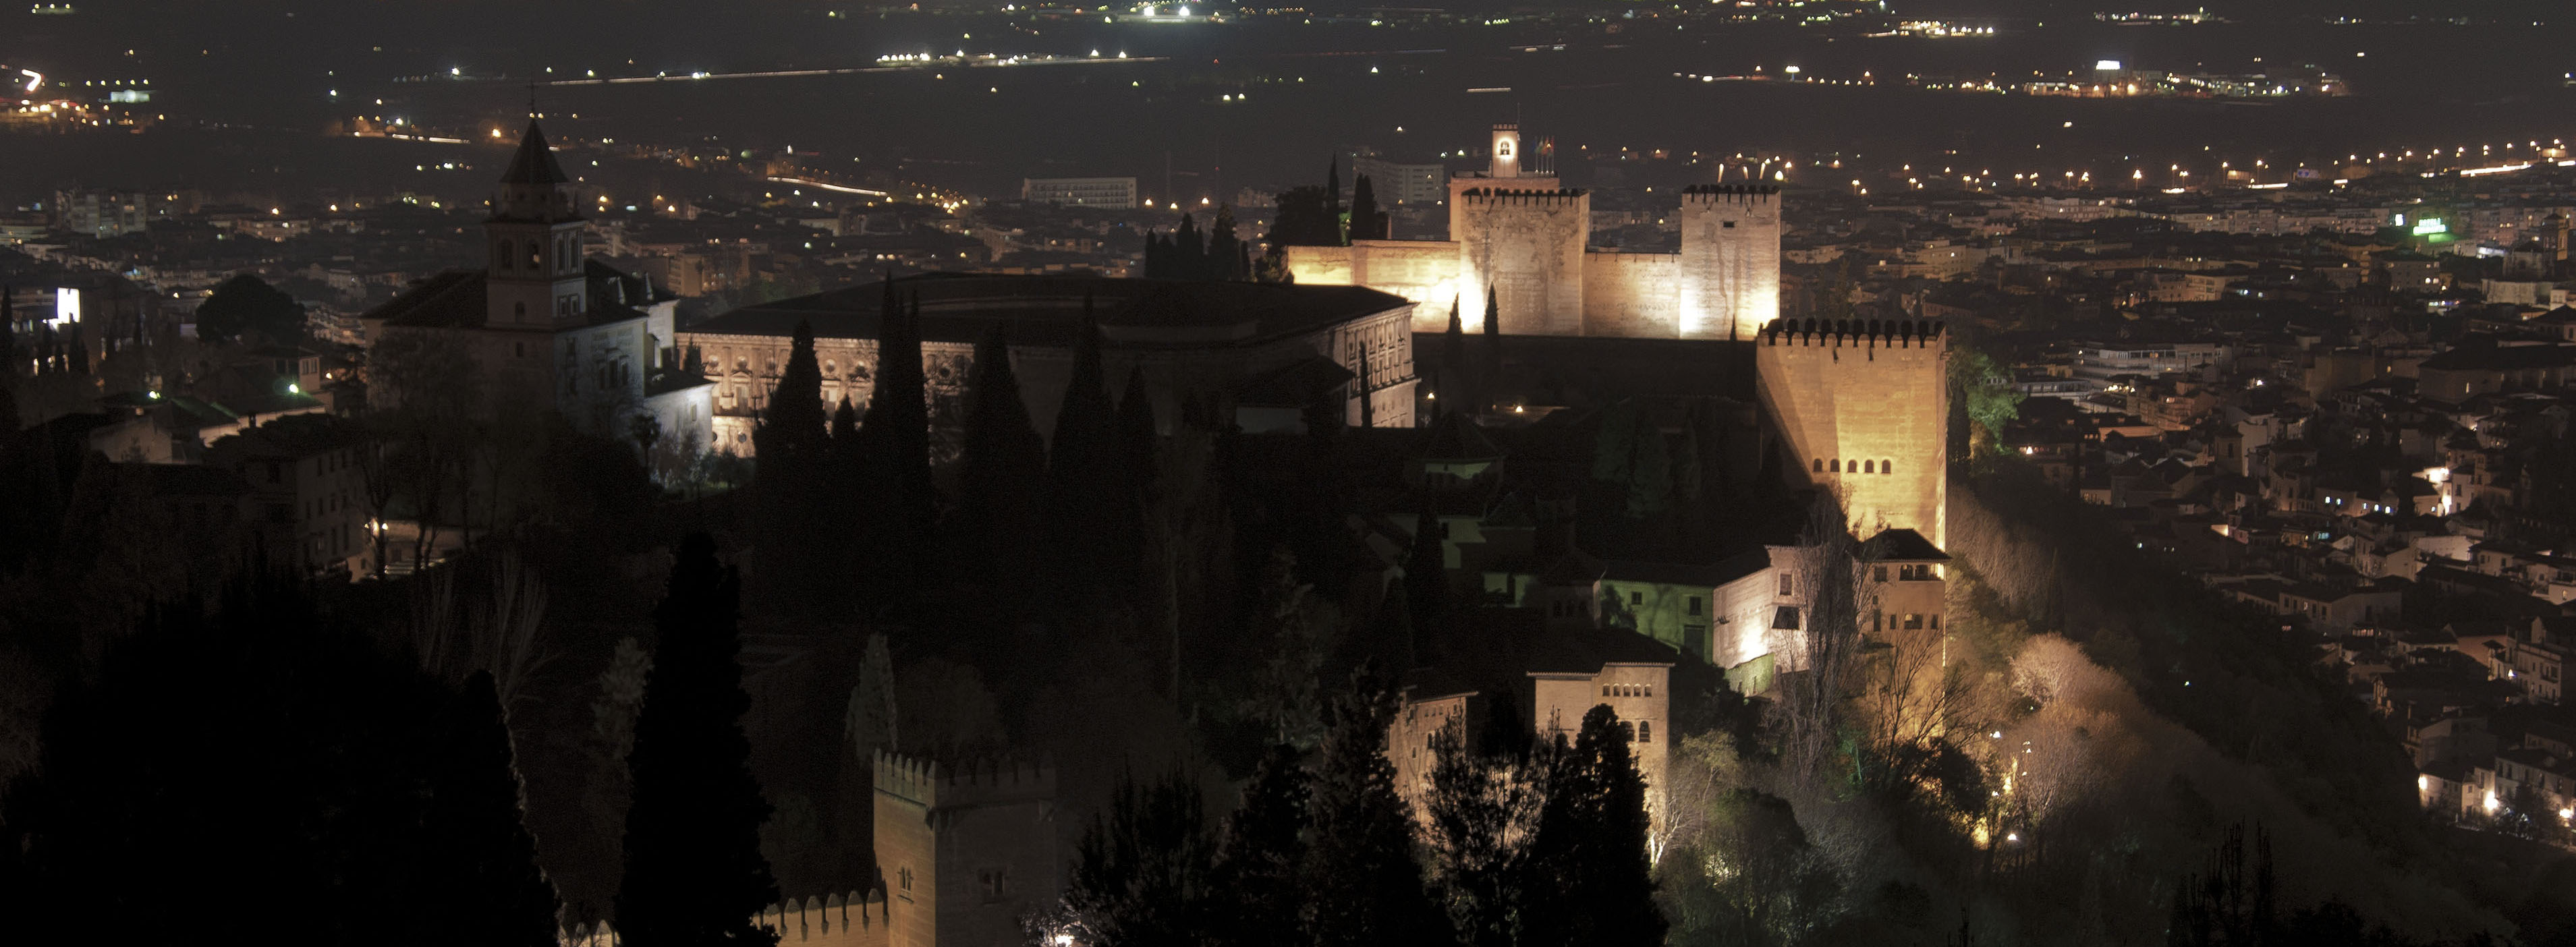 Ruta nocturna gratuita por Granada